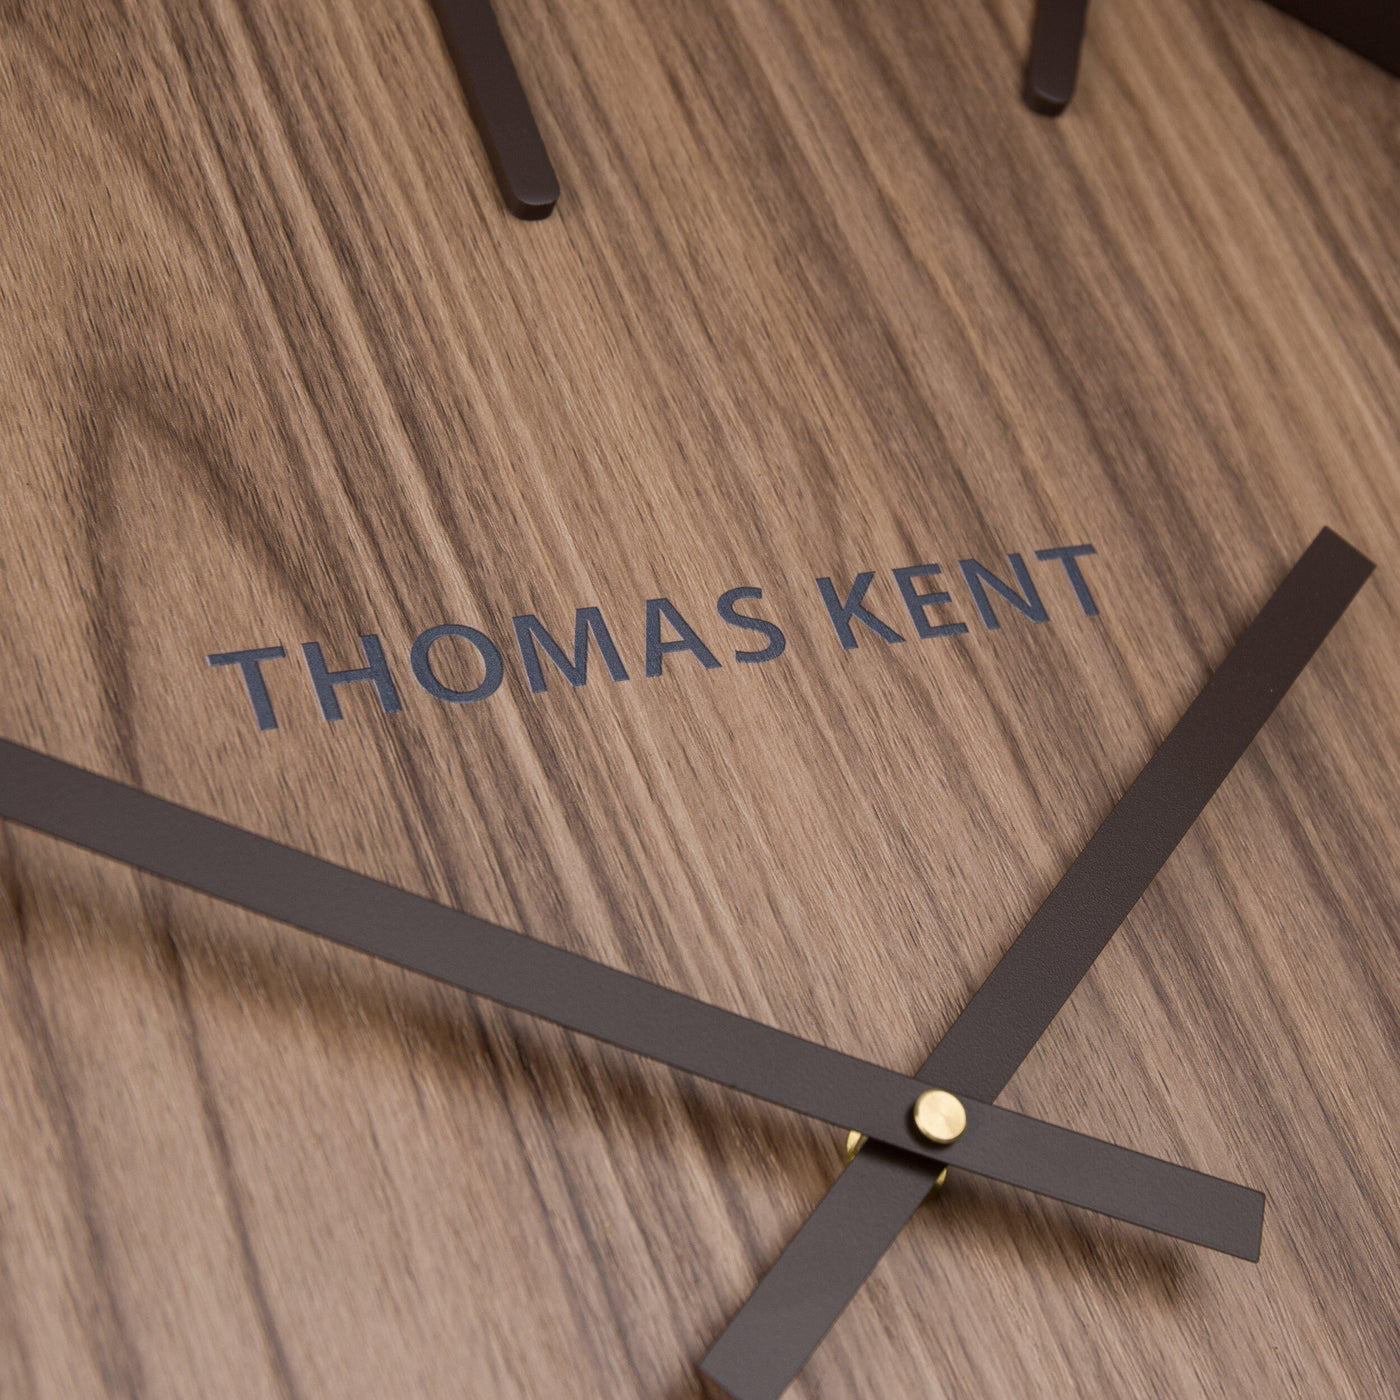 Thomas Kent London. Woodstock Wall Clock 20" (51cm) Elm *NEW* - timeframedclocks